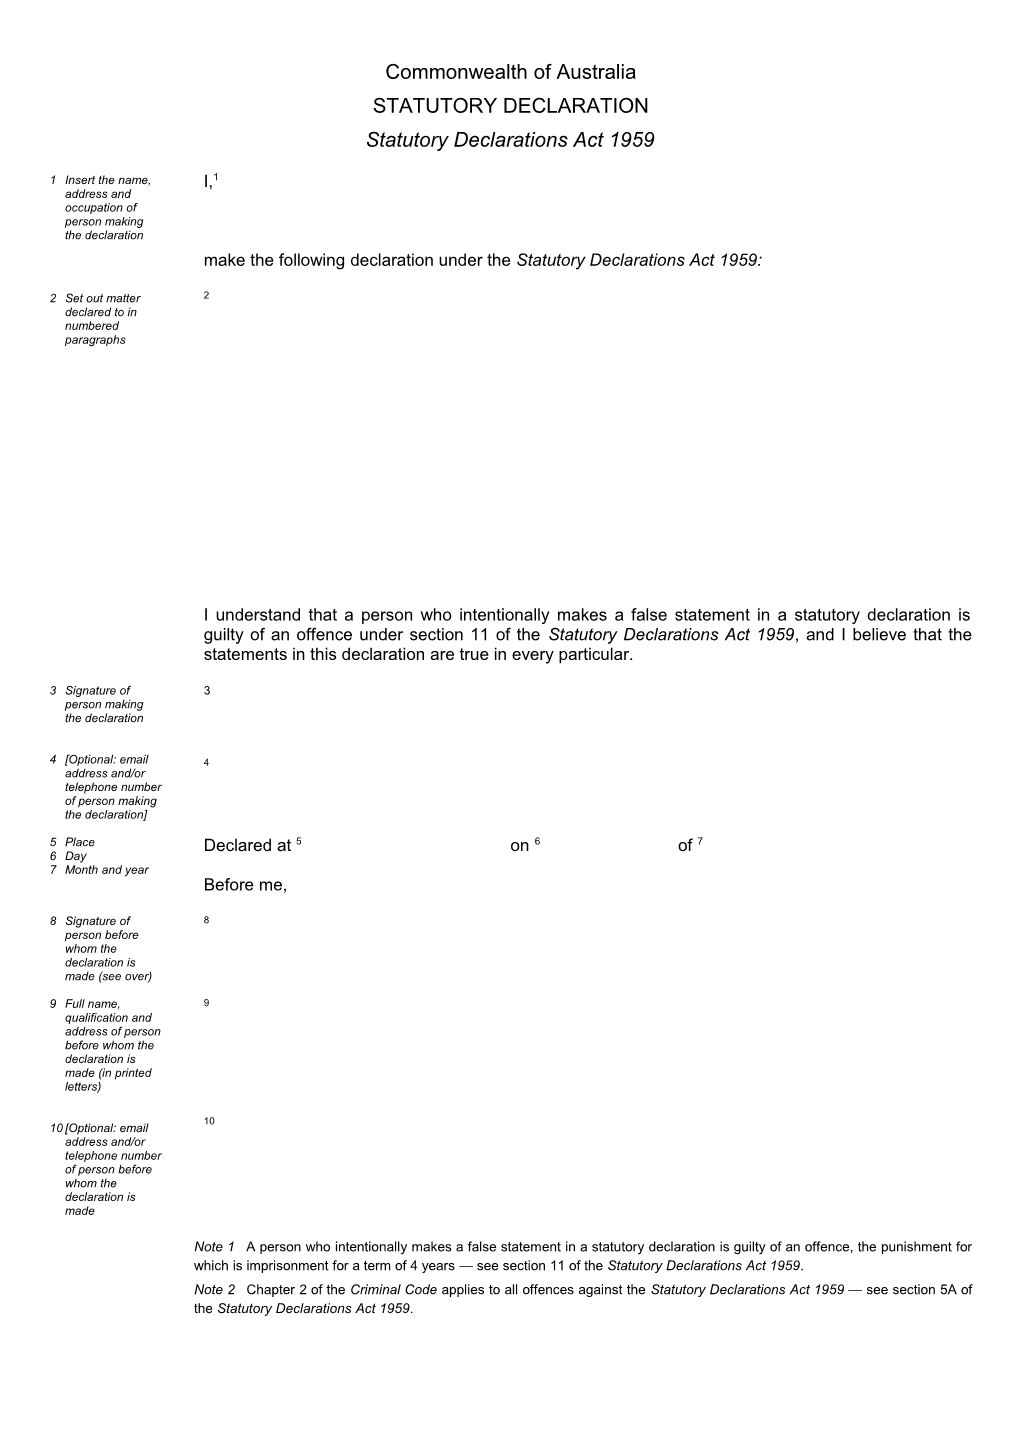 Commonwealth of Australia Statutory Declarations Form